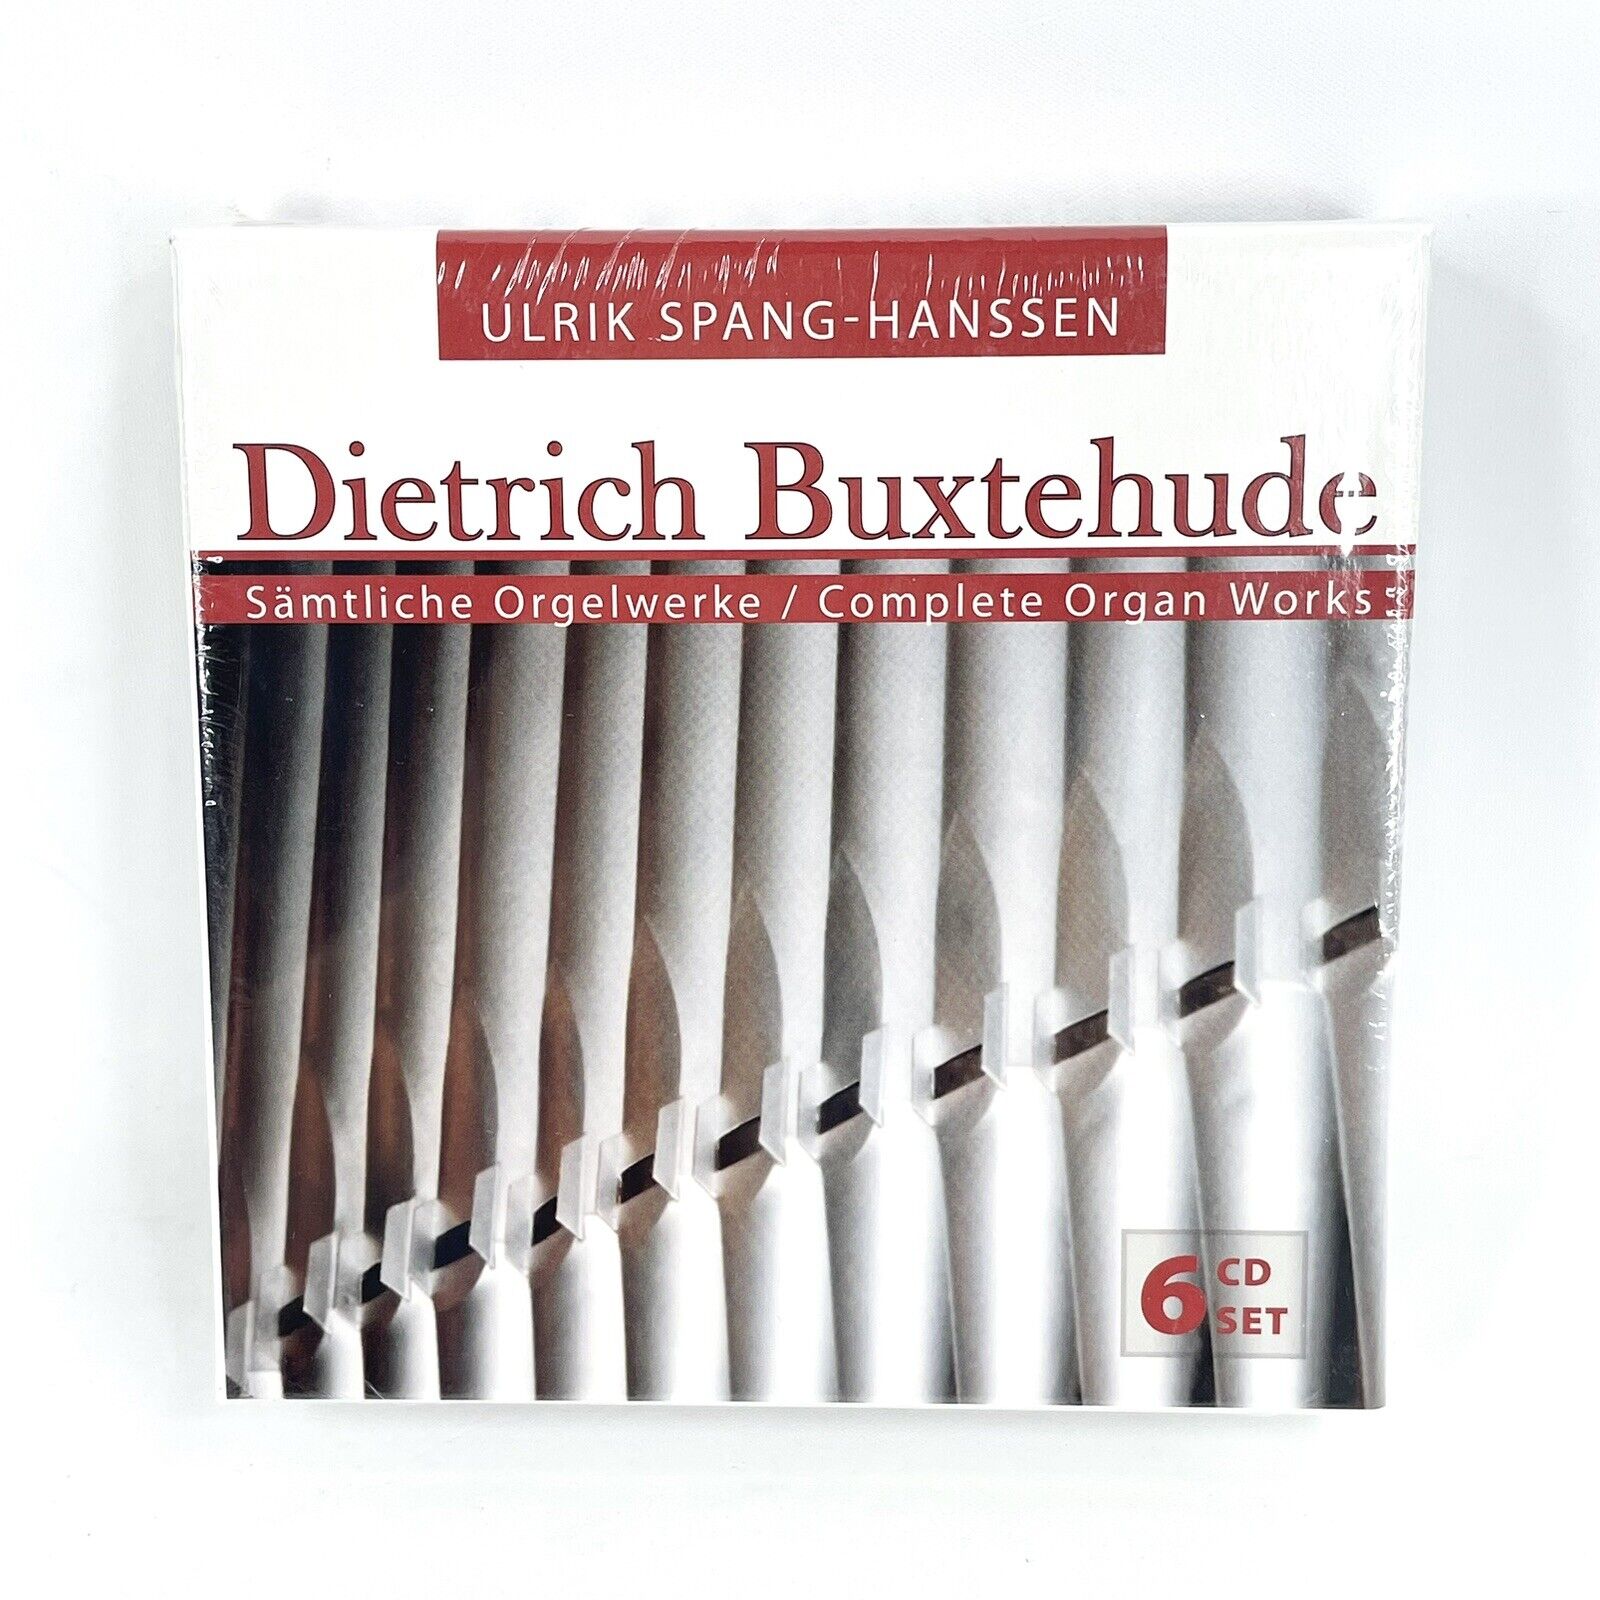 Dietrich Buxtehude Complete Organ Works 6 CD Box set Ulrik Spang-Hanssen new